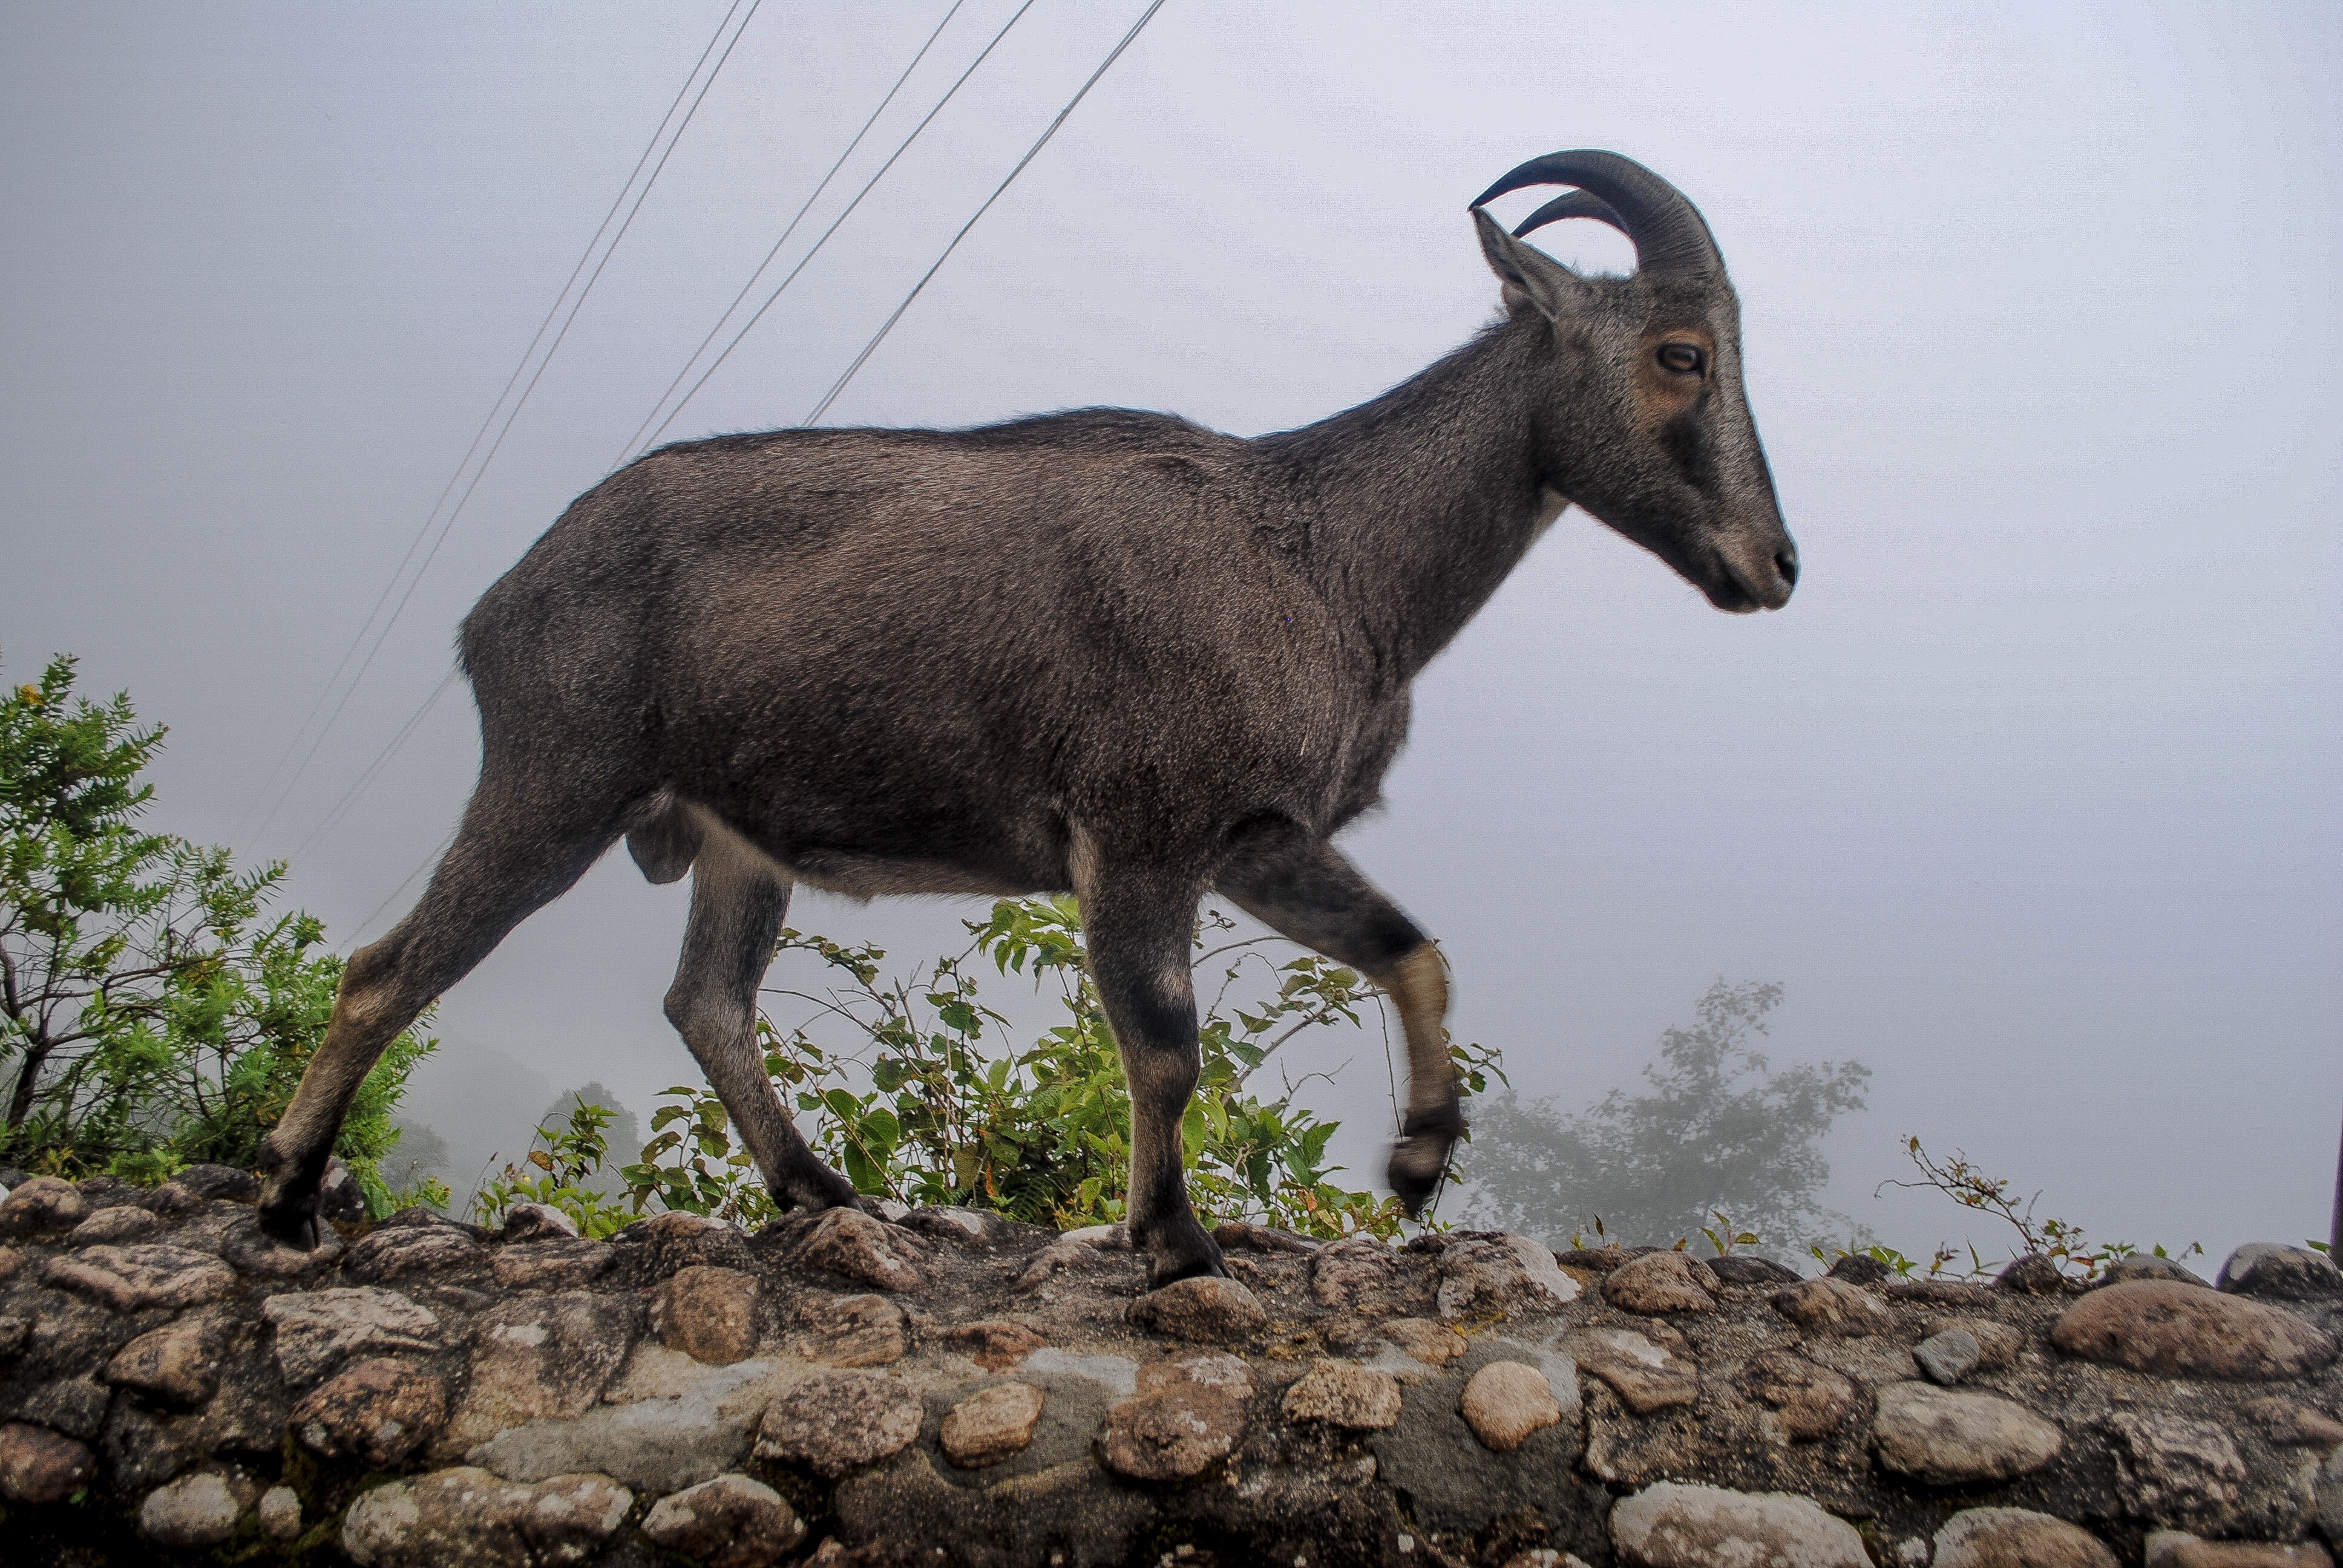 Rajamalai / Eravikulam Wildlife Sanctuary | Mountain Goat called a Nilgiry Thar